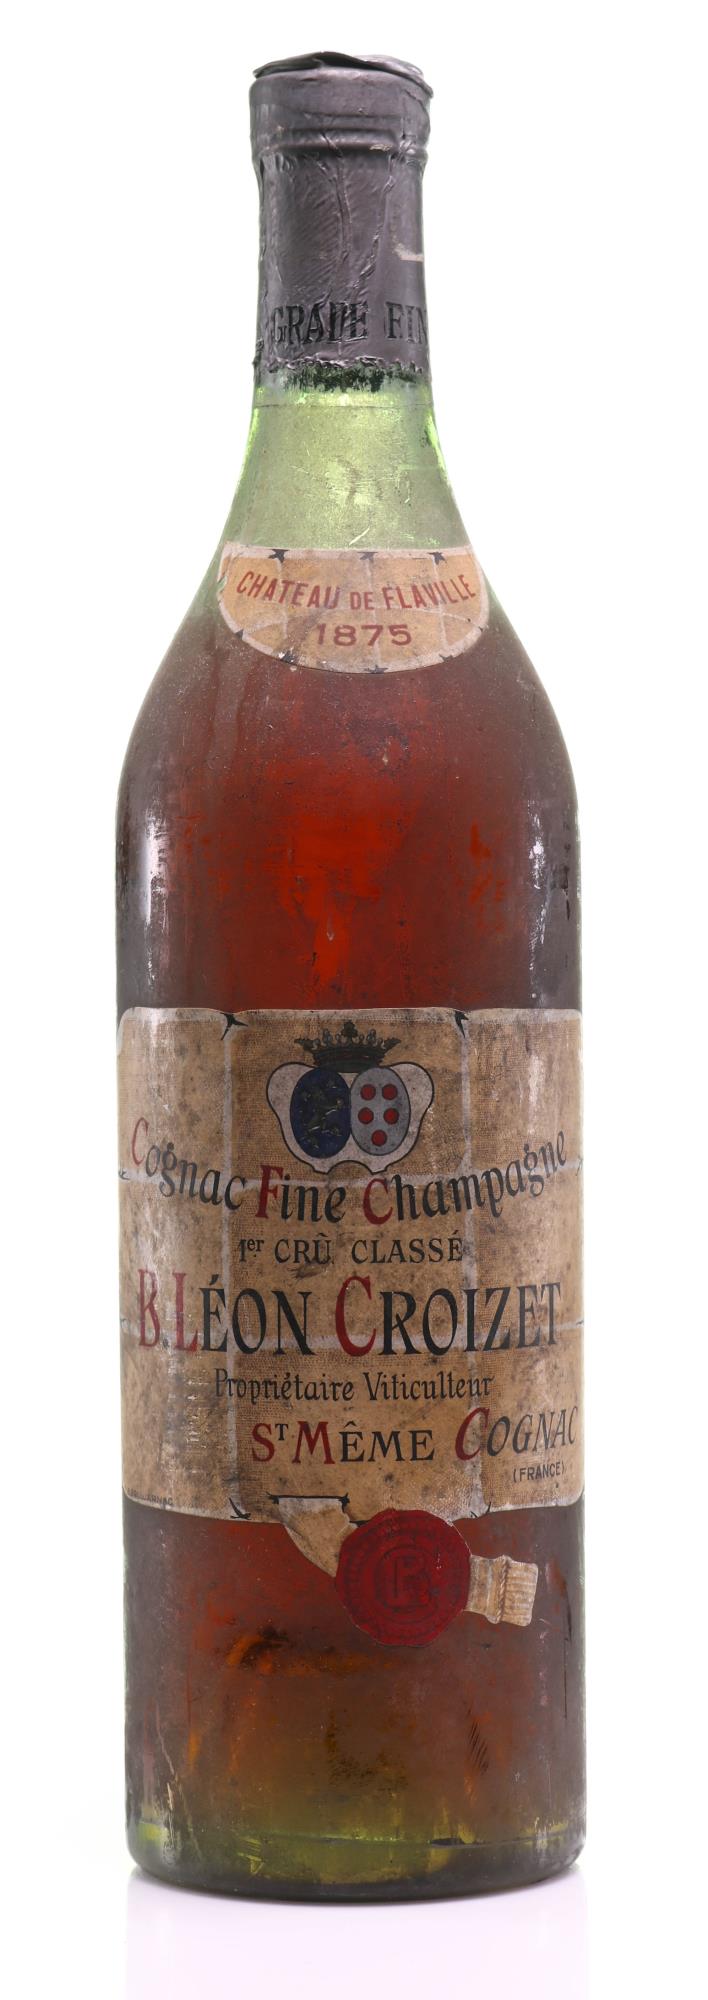 Croizet Chateau de Flaville Grande Fine Champagne Cognac 1875, 1e Cru Classé - Rue Pinard